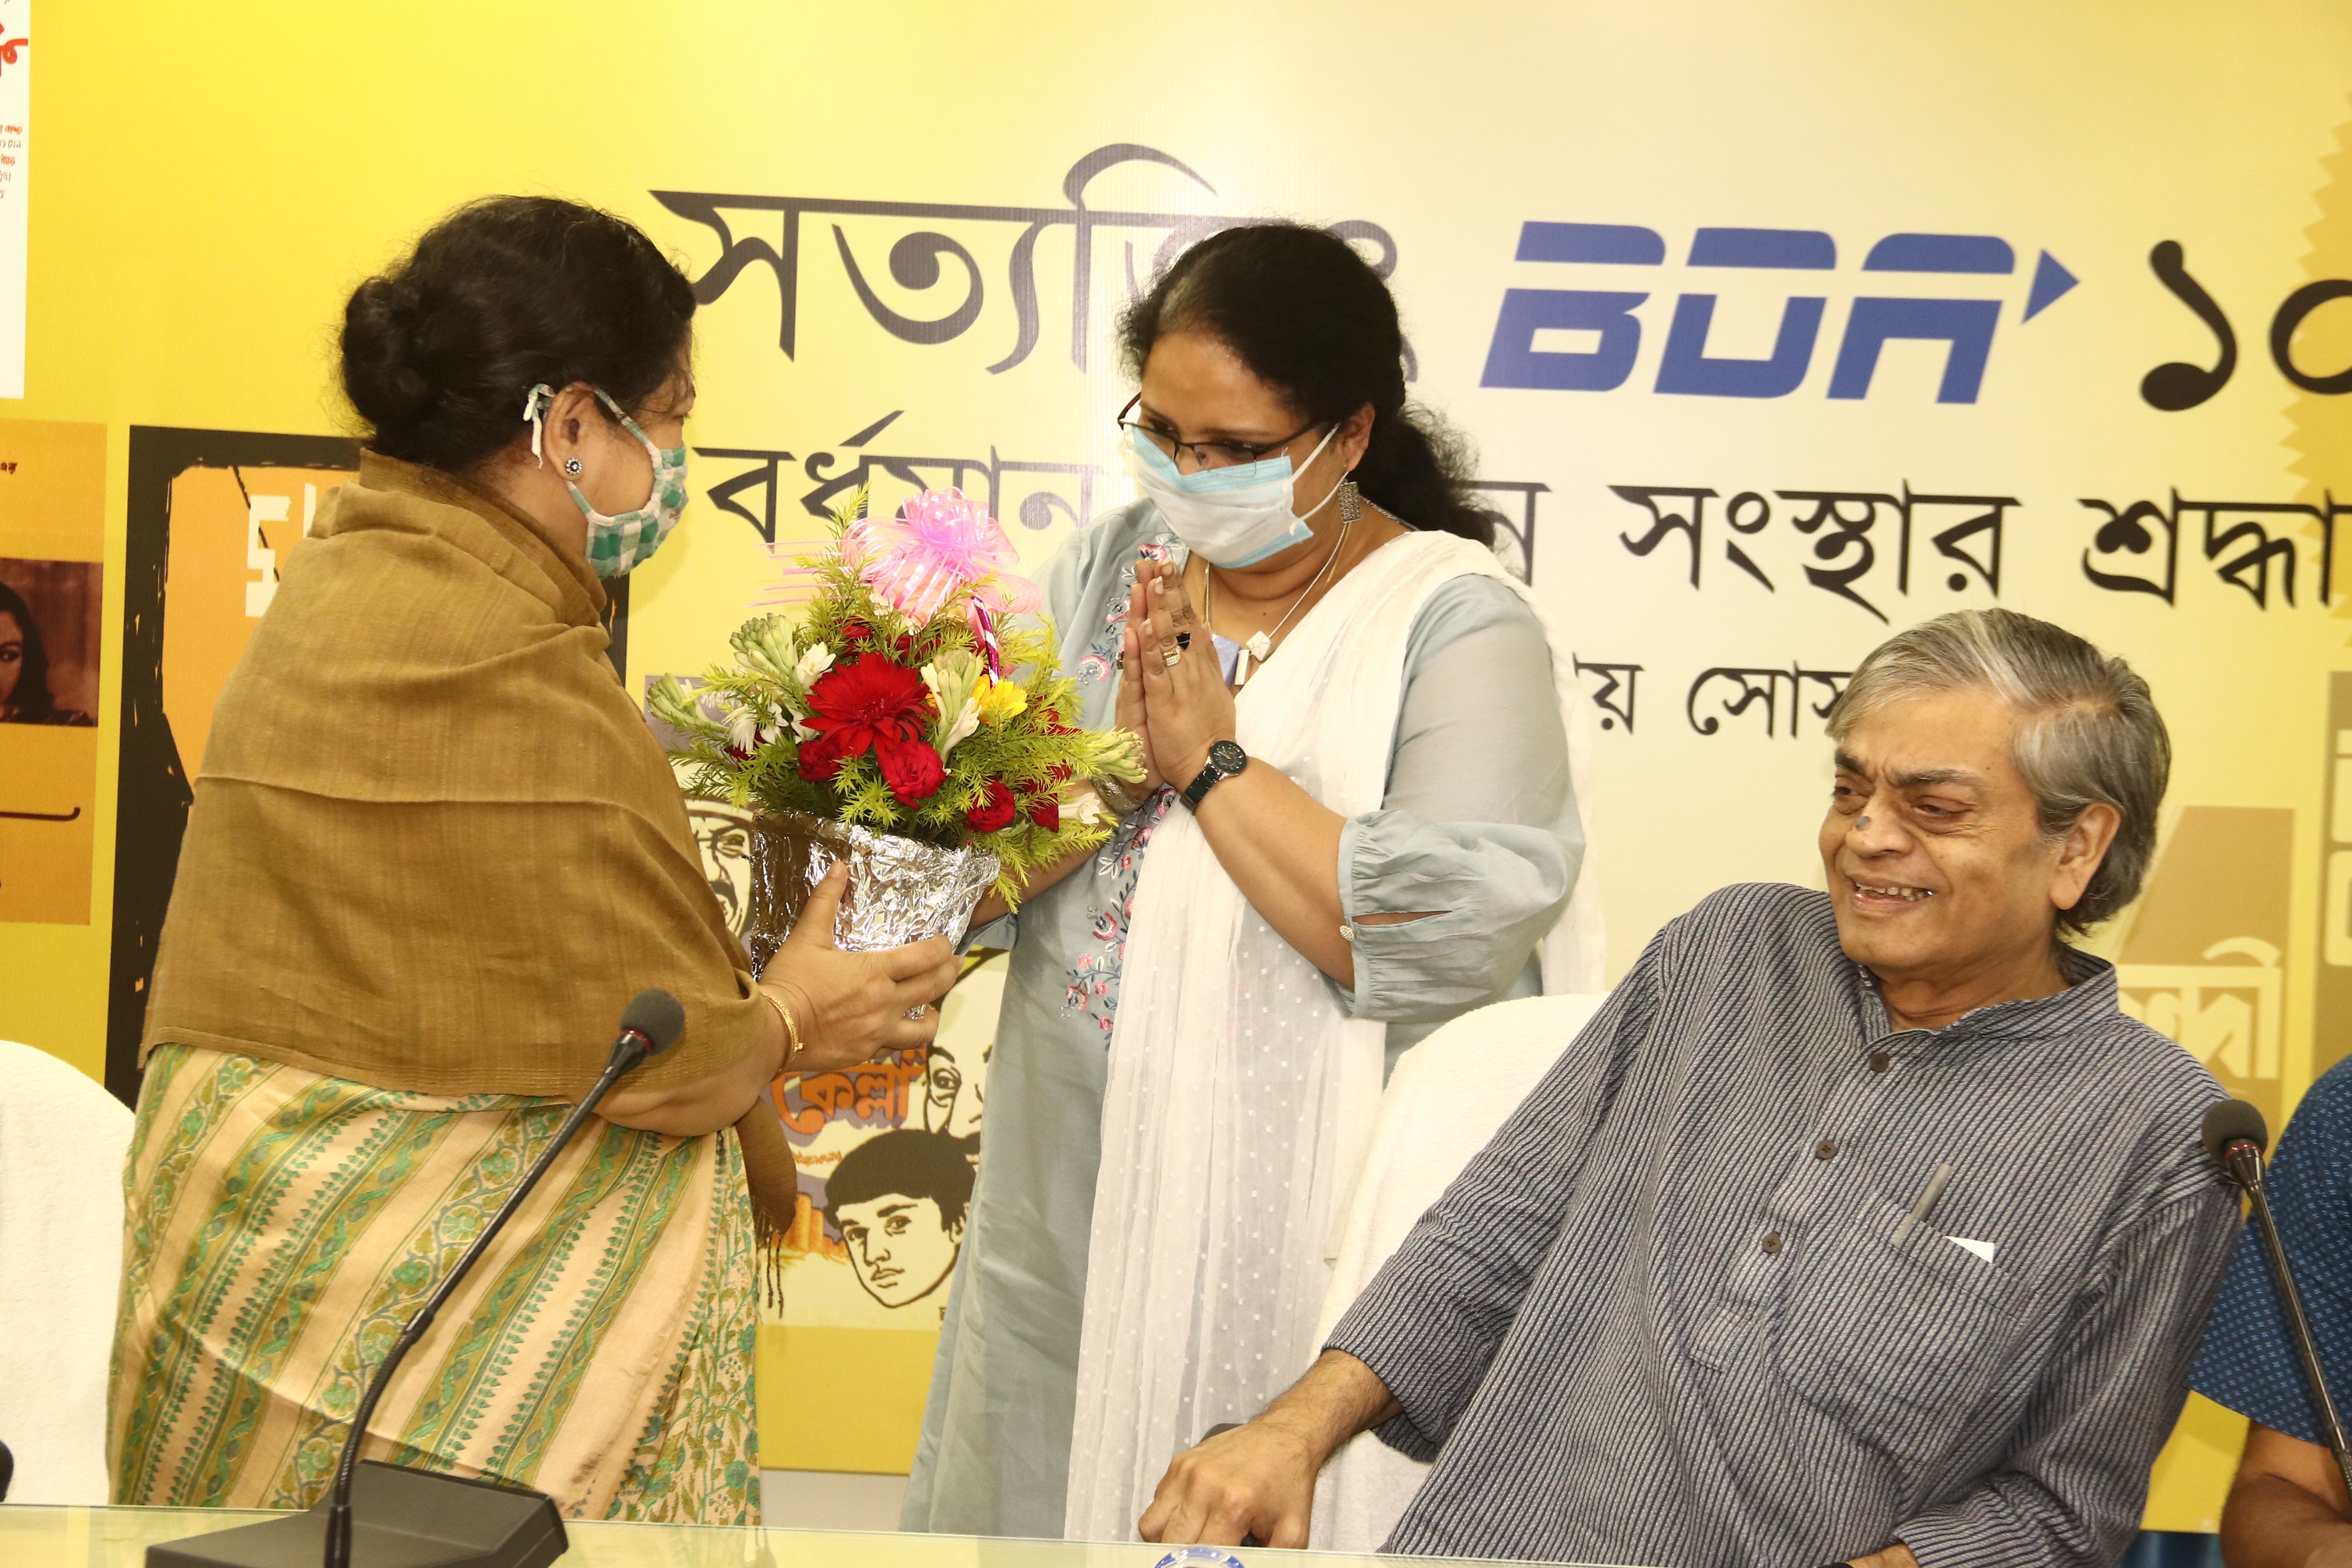 BDA's venture to celebrate the occasion of the birth centenary of Shri Satyajit Ray1